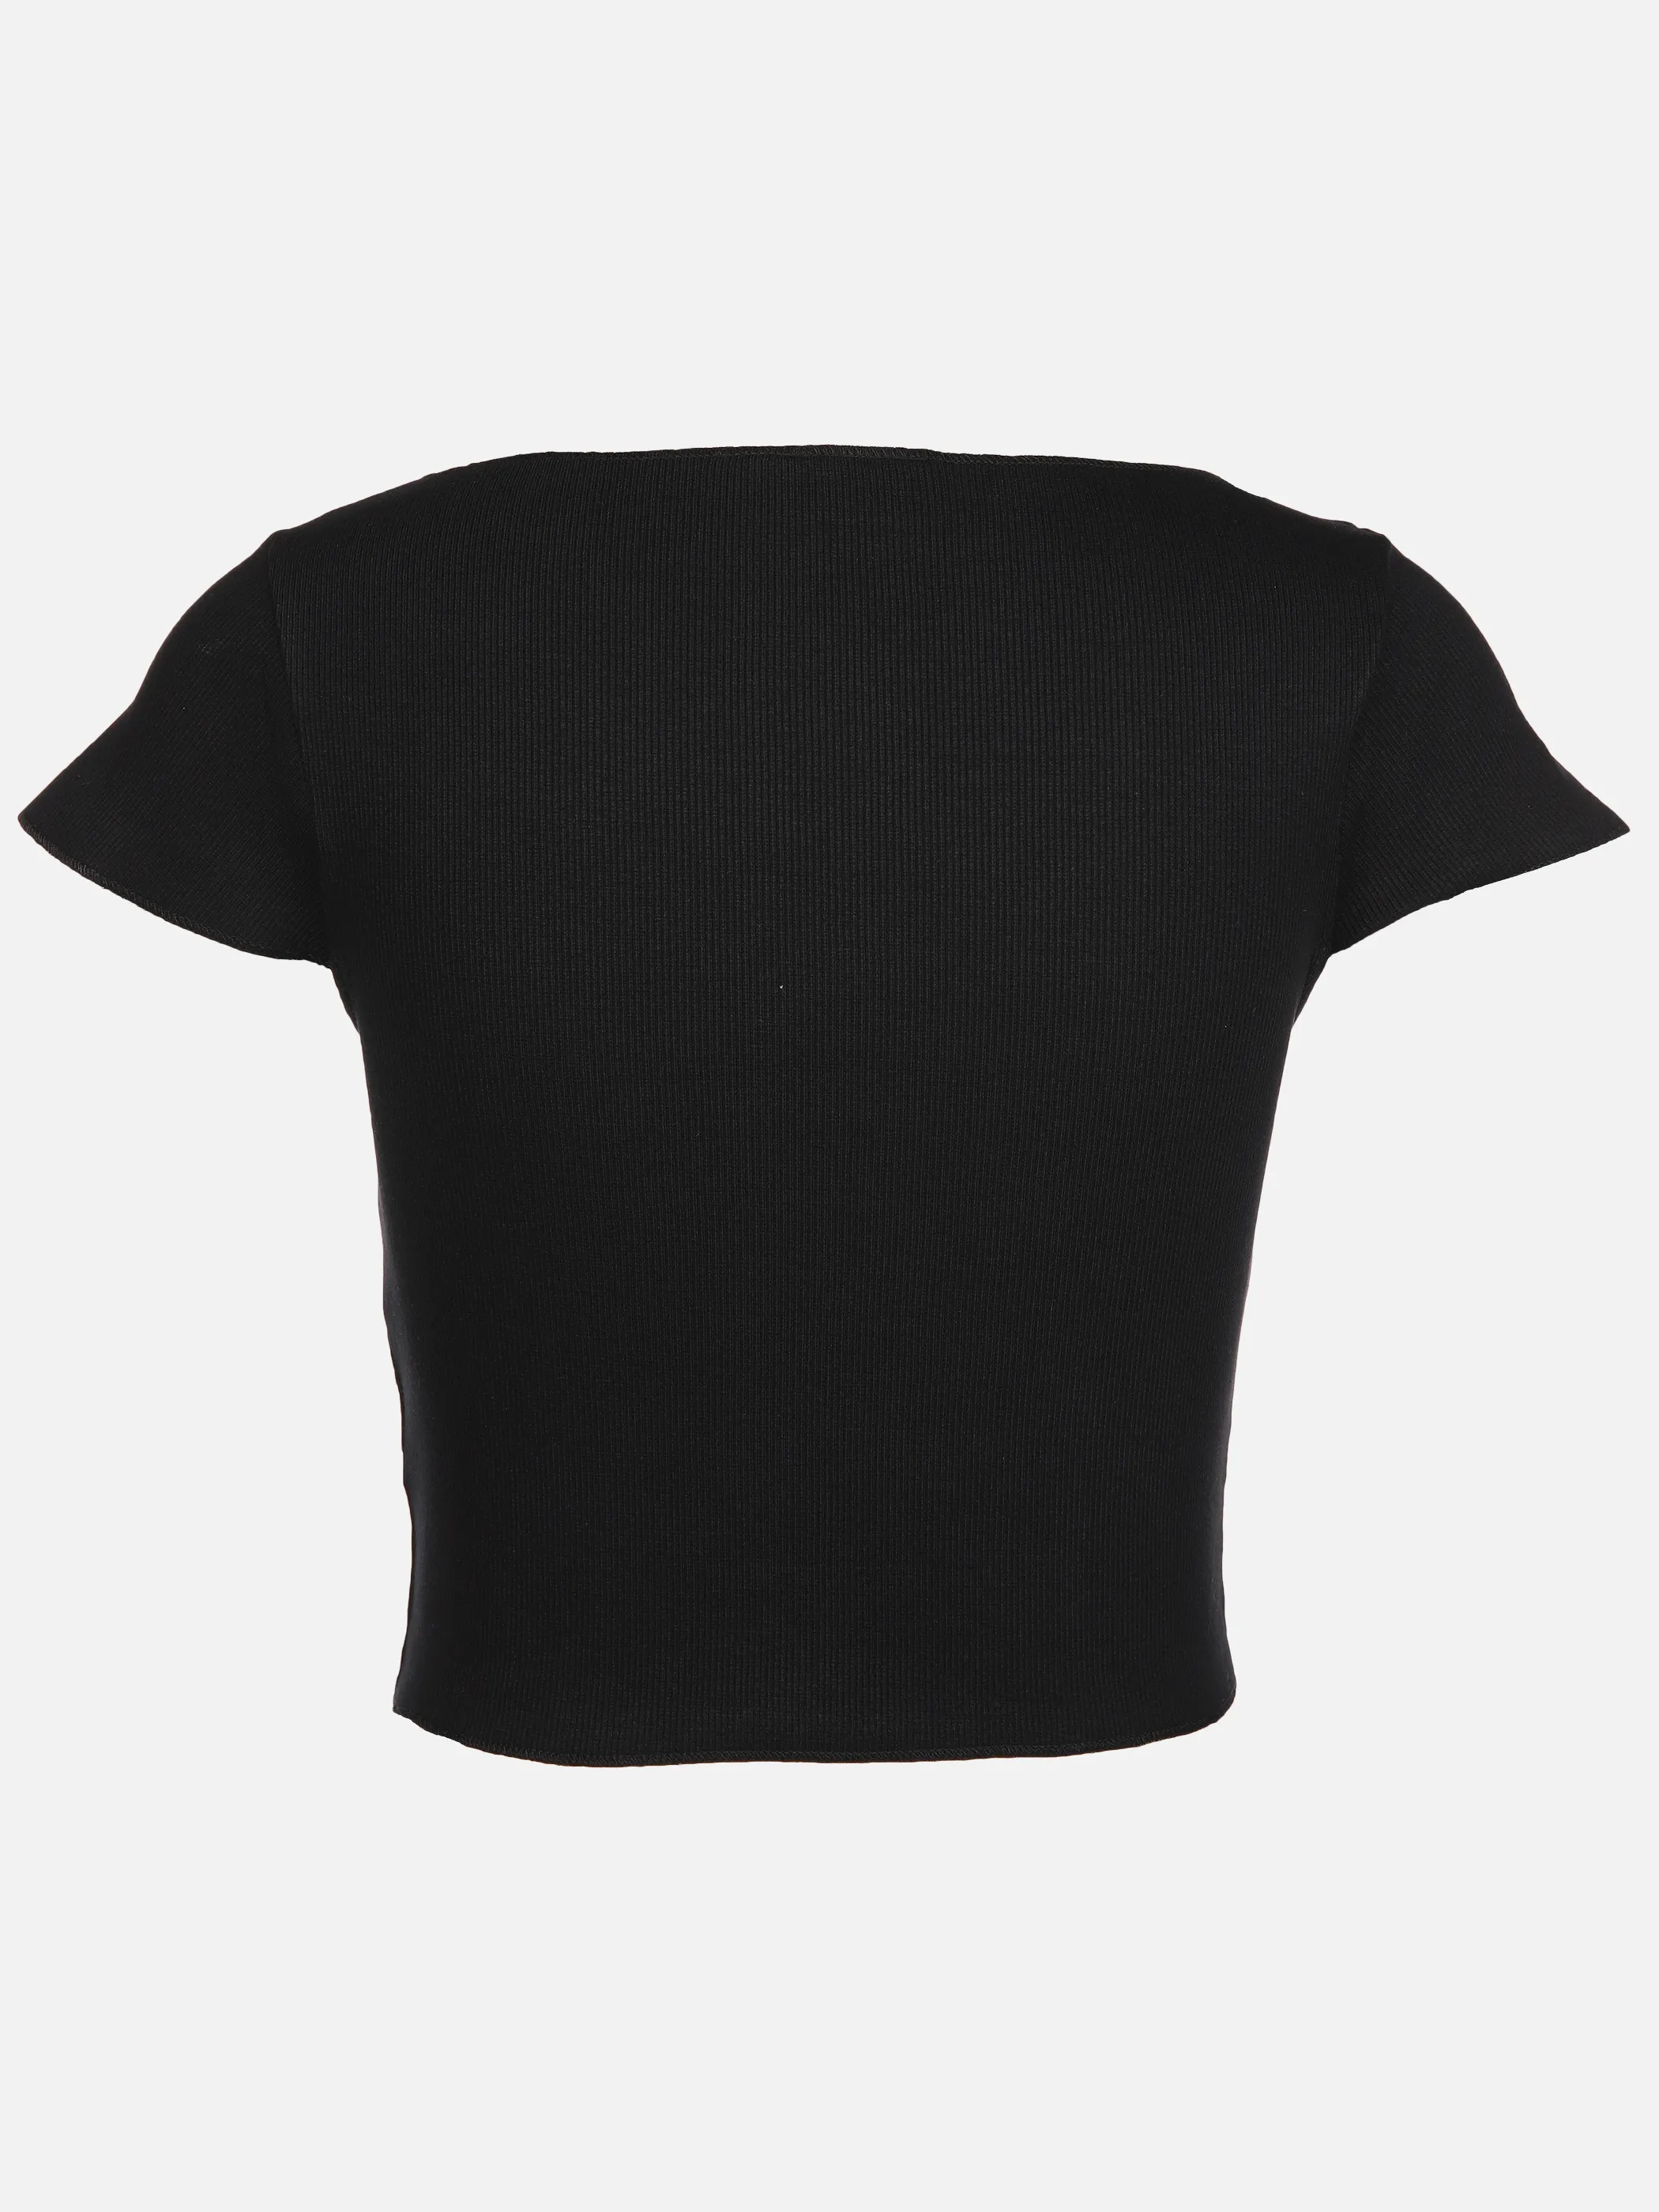 IX-O YF- Da T-Shirt Schwarz 890777 BLACK 2